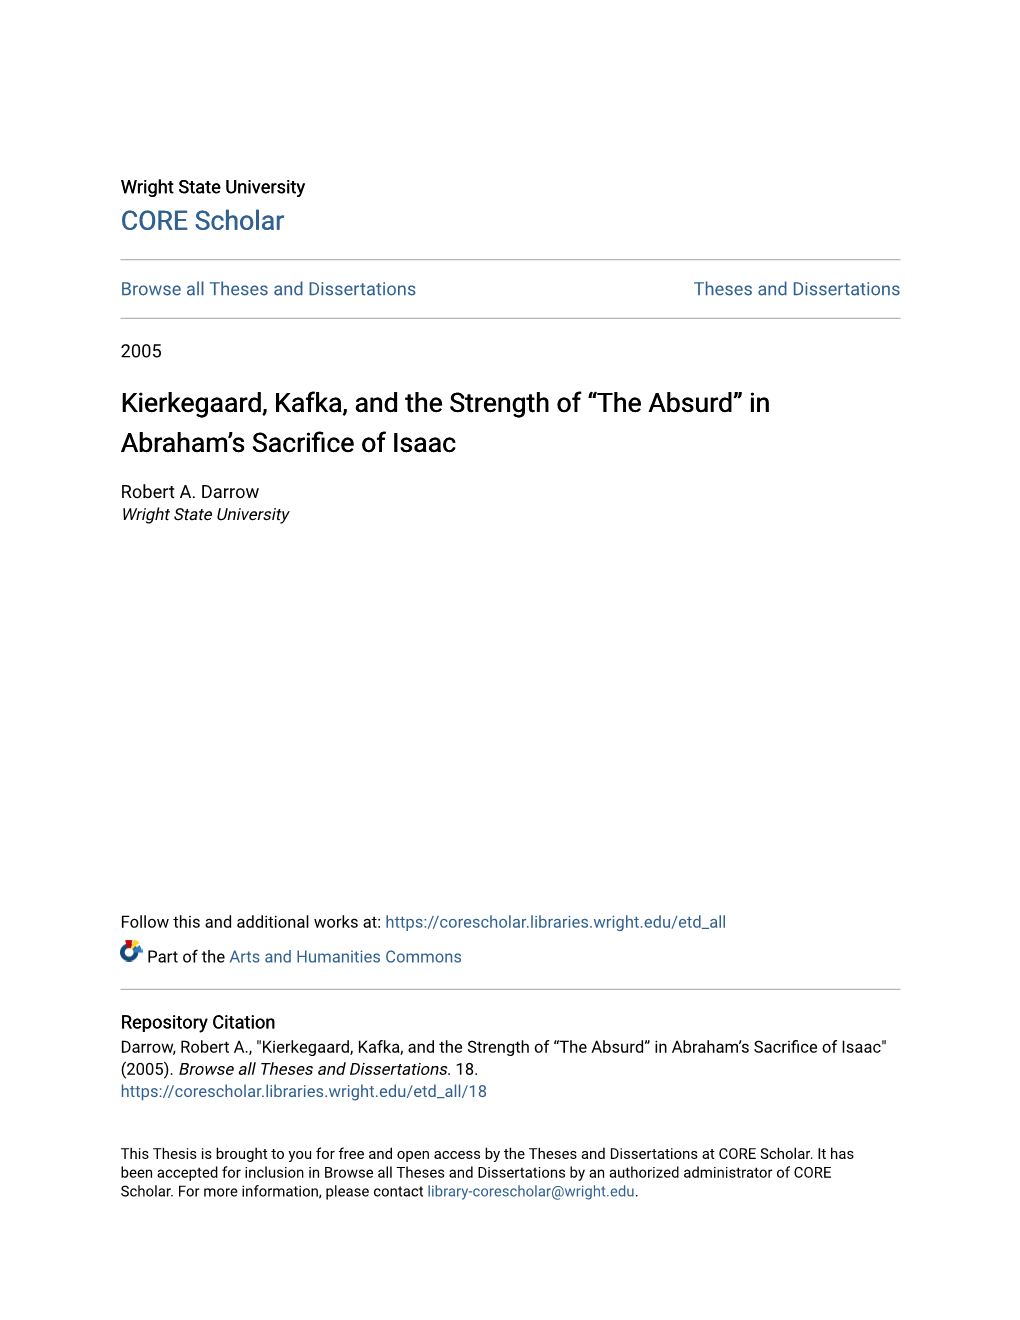 Kierkegaard, Kafka, and the Strength of “The Absurd” in Abraham’S Sacrifice of Isaac